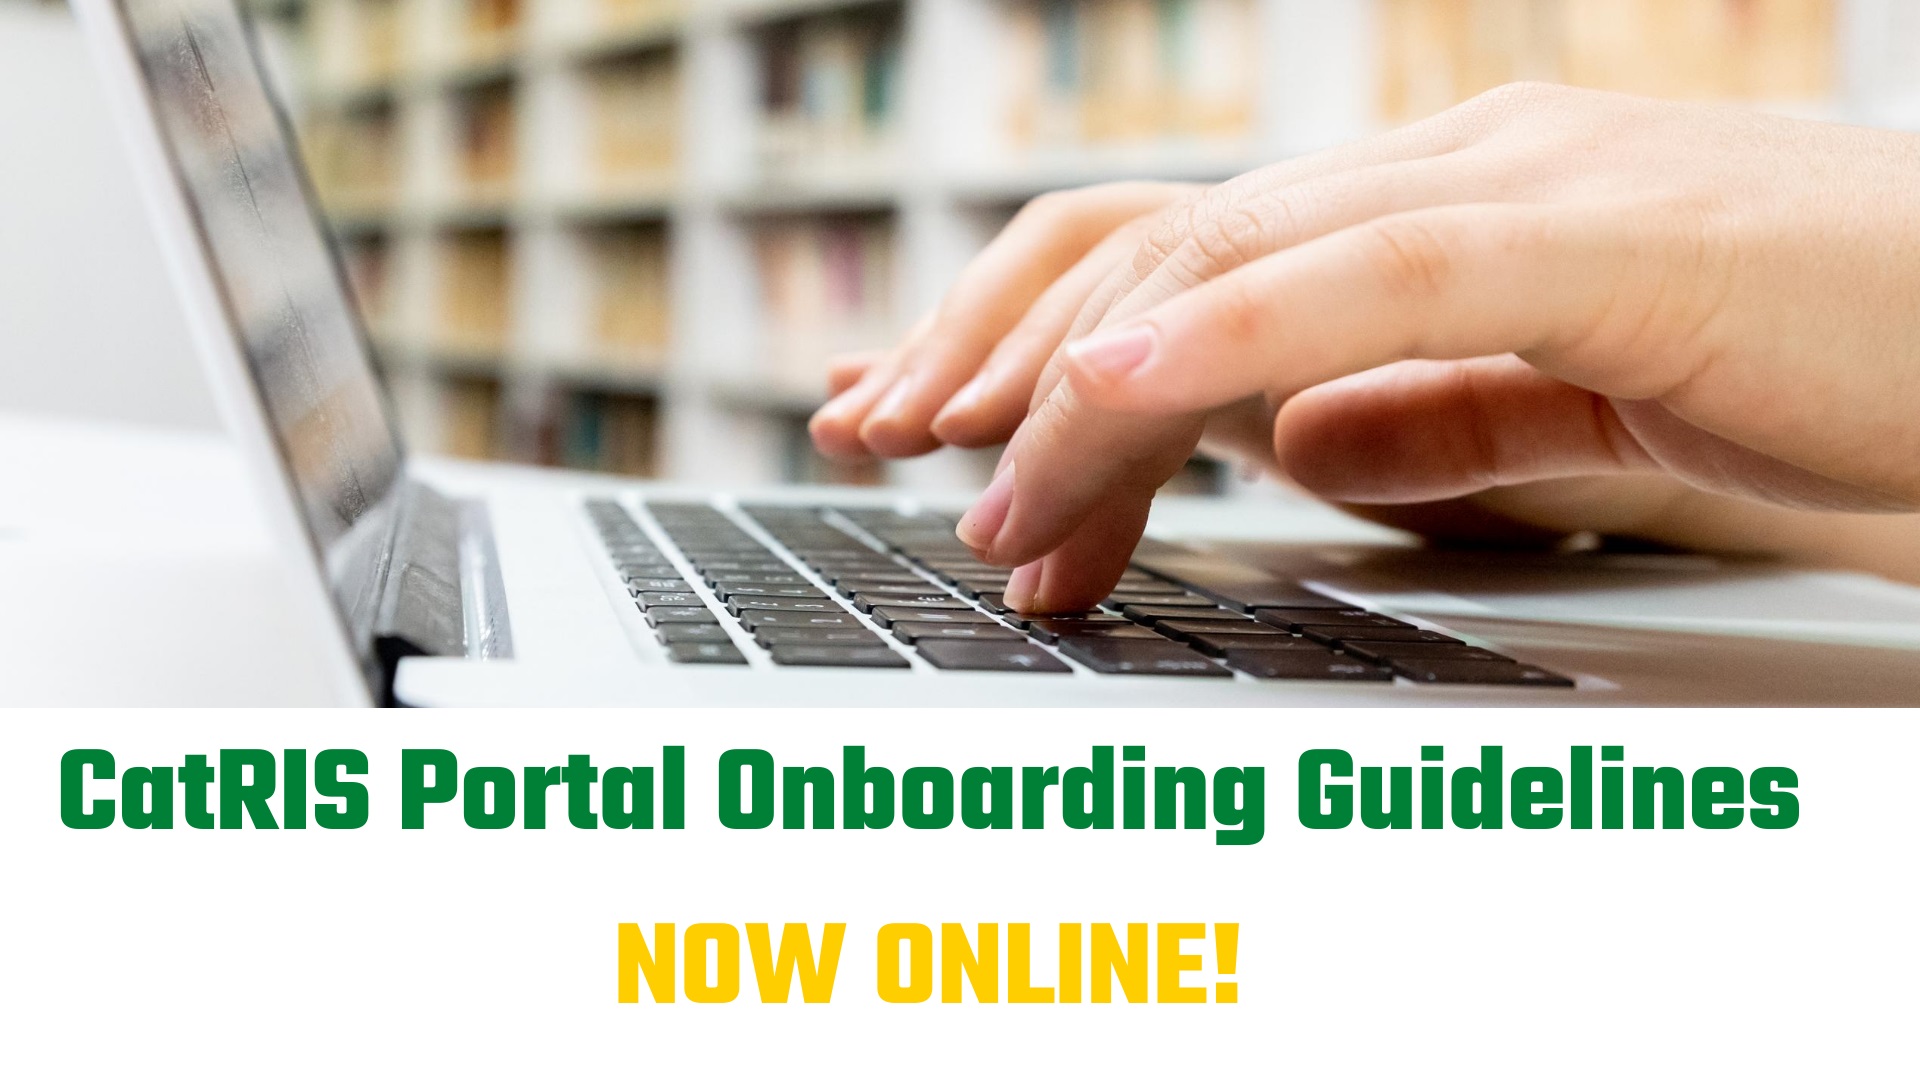 CatRIS Portal Onboarding Guidelines now online!